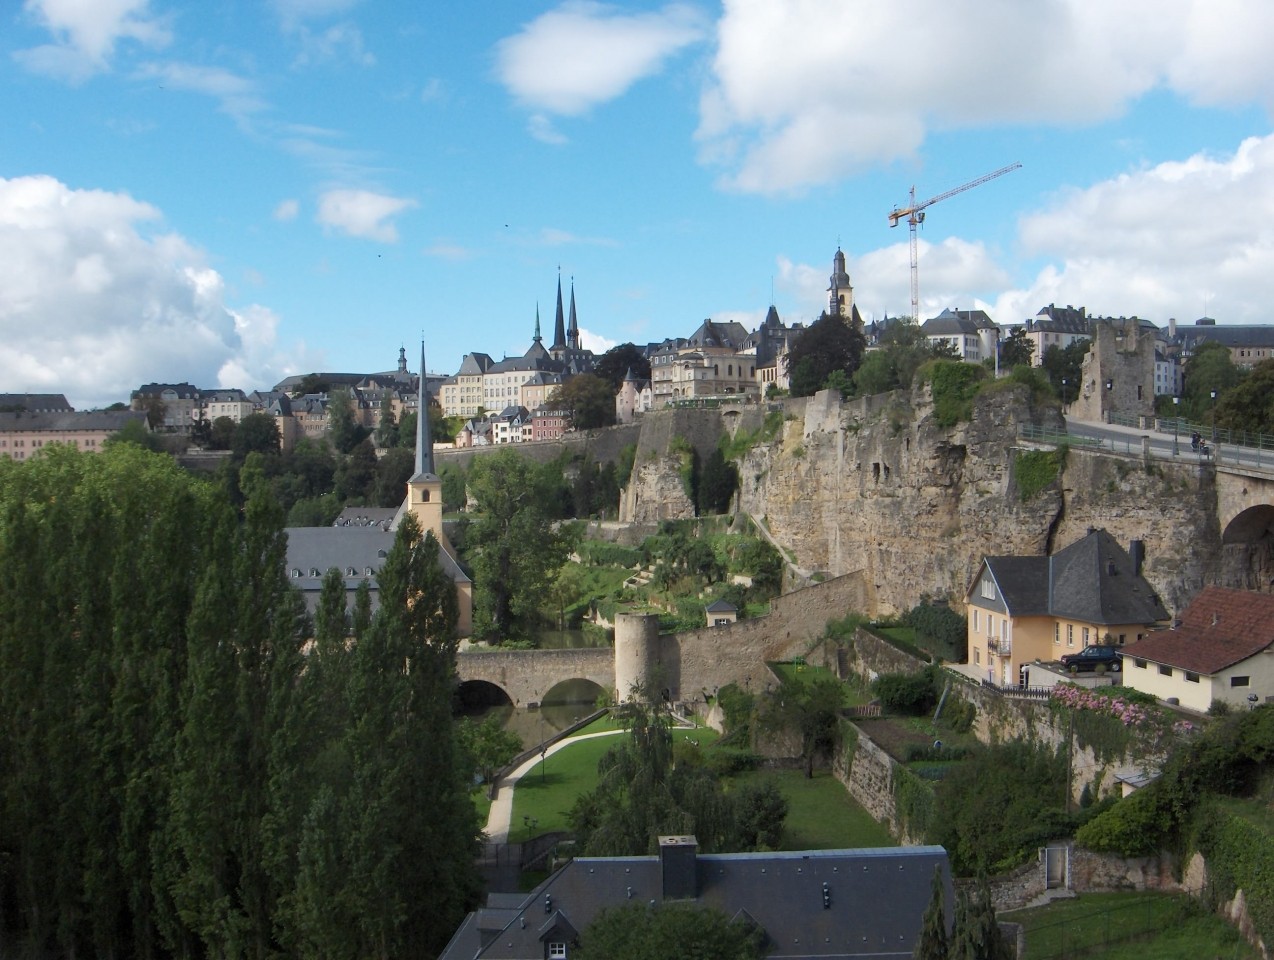 Internship Opportunities in Luxurious Luxembourg